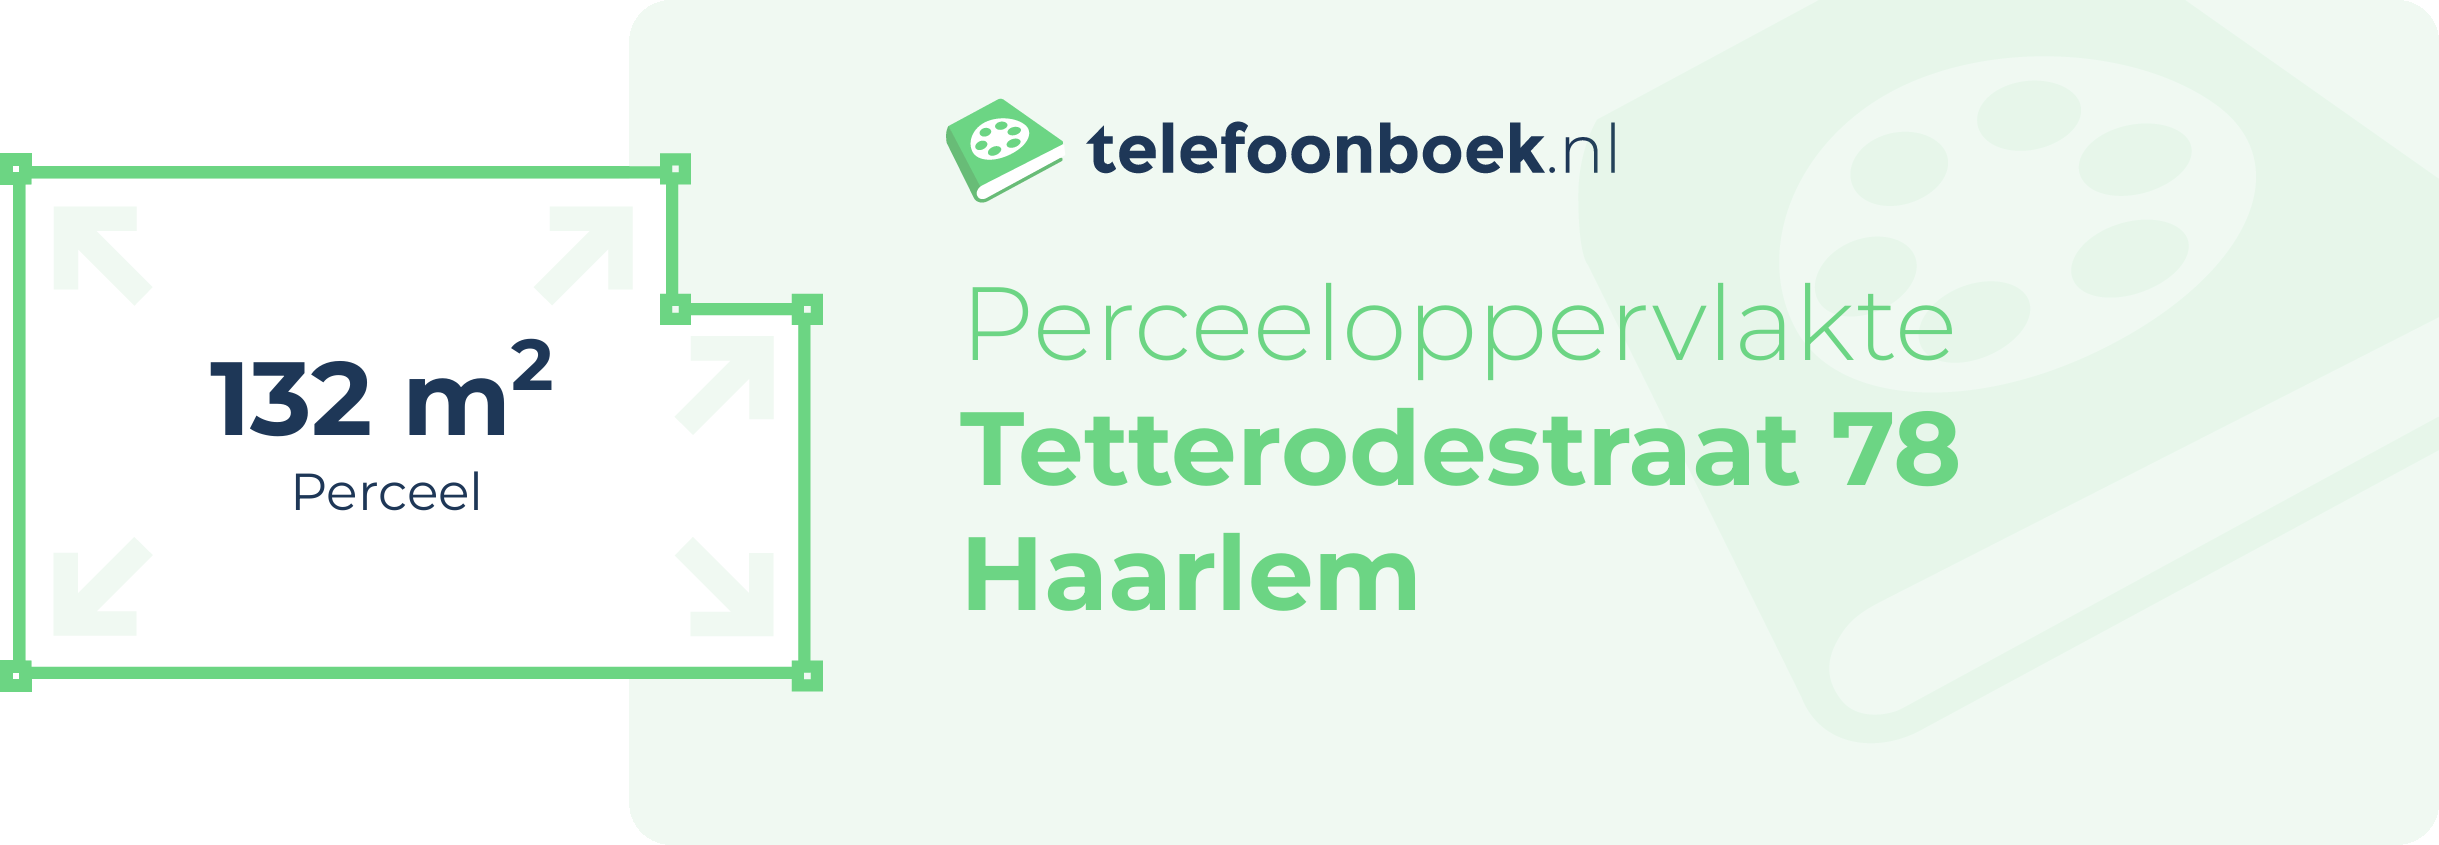 Perceeloppervlakte Tetterodestraat 78 Haarlem